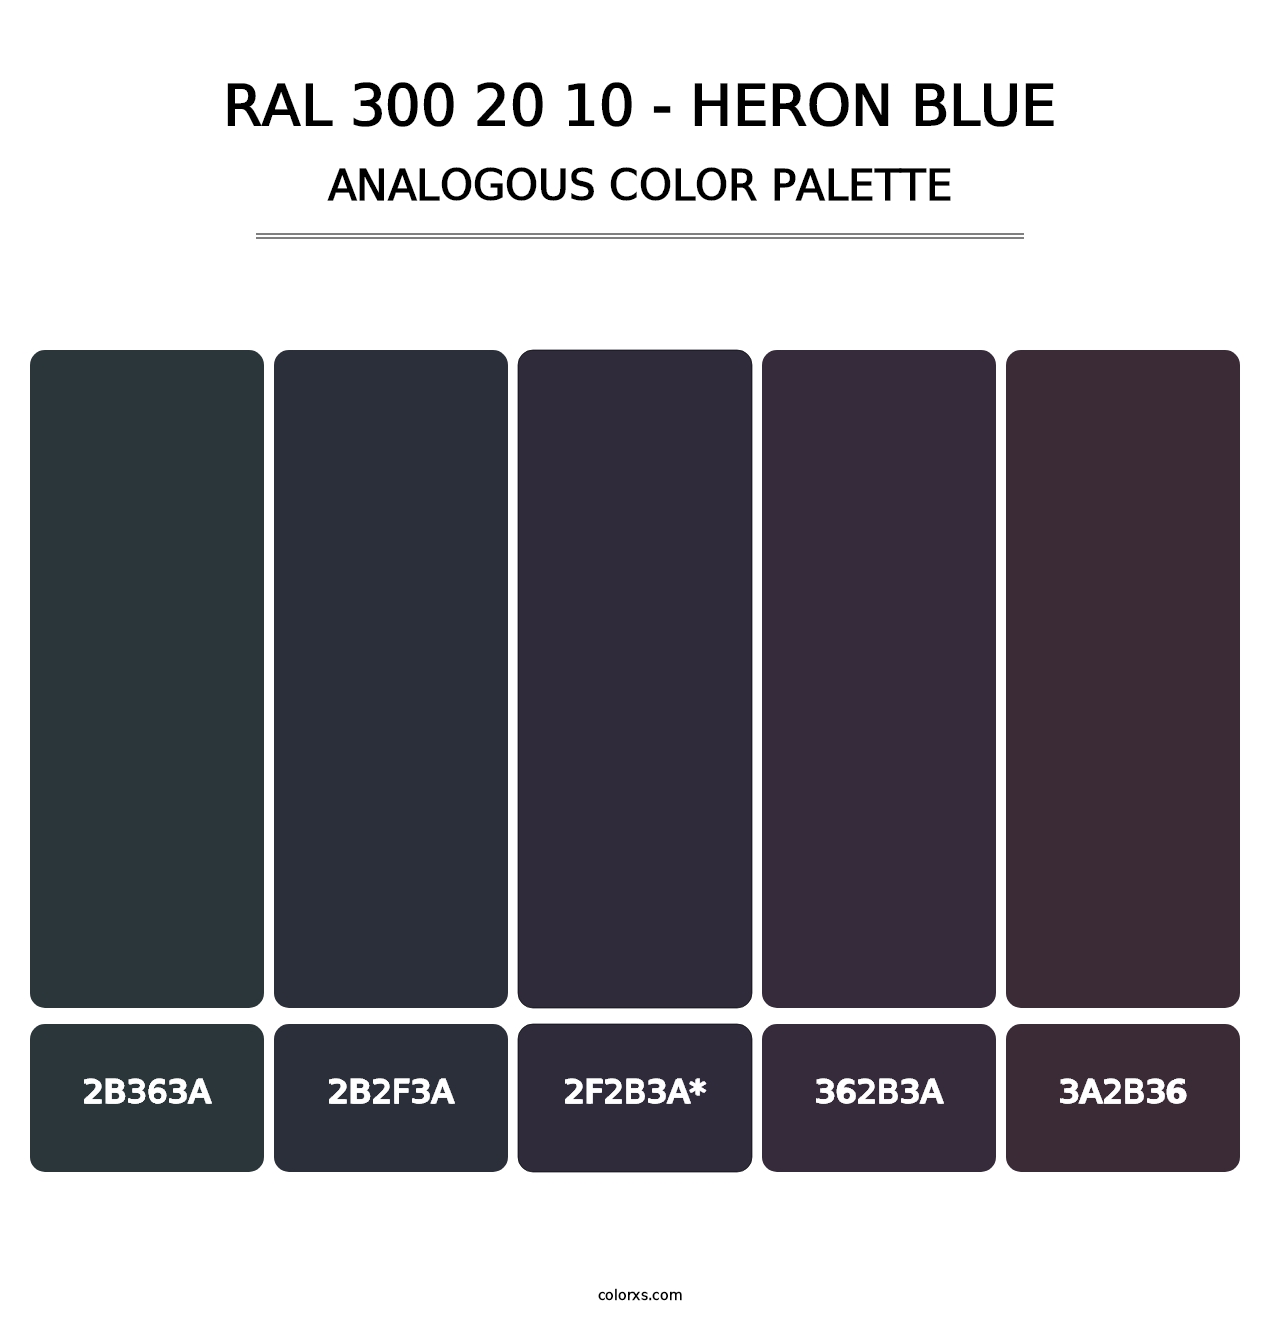 RAL 300 20 10 - Heron Blue - Analogous Color Palette